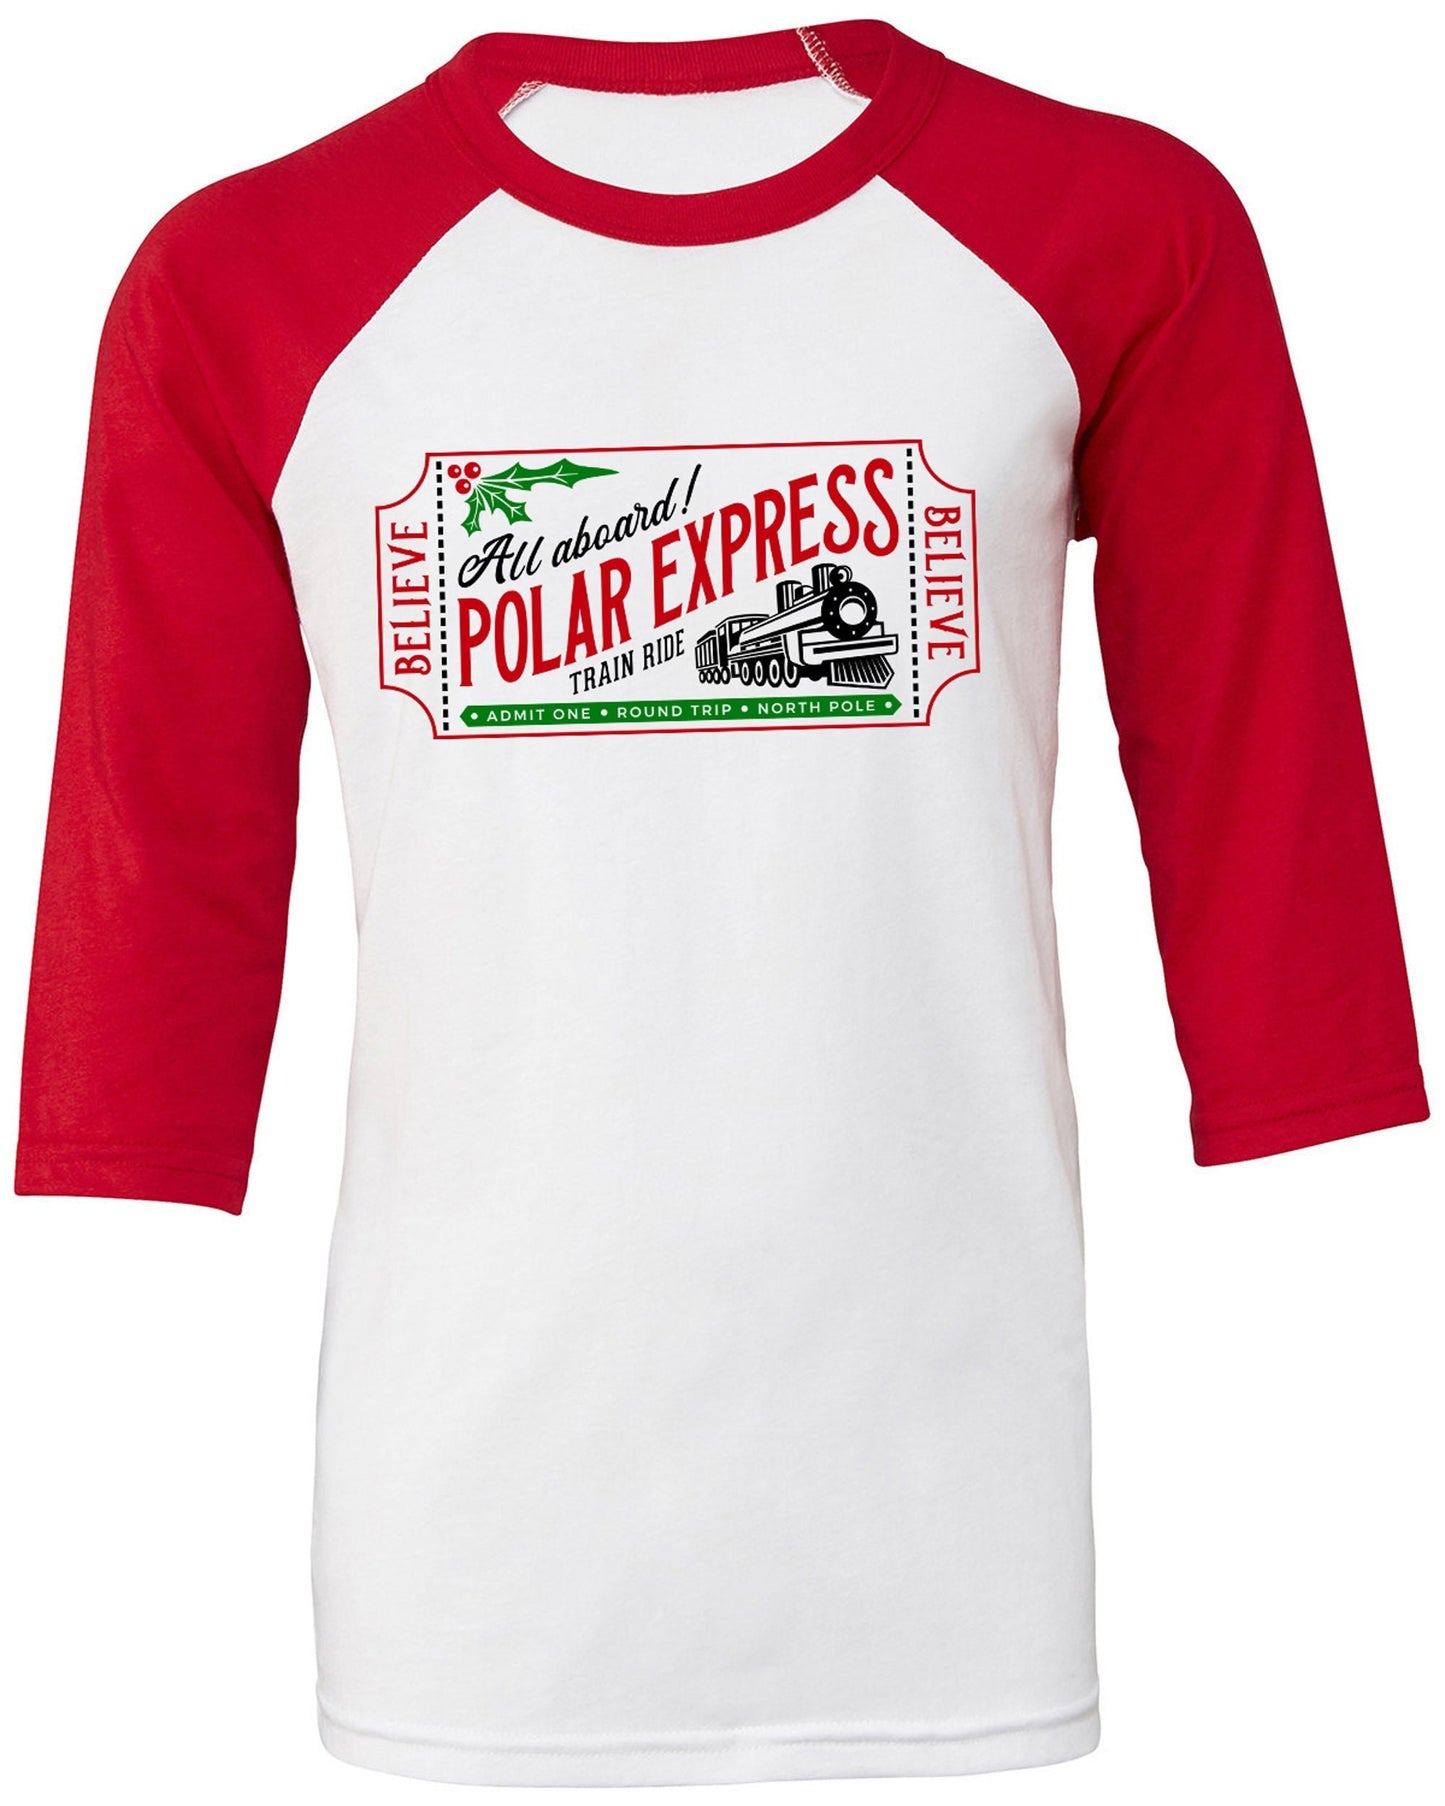 Polar Express Ticket Christmas Raglan shirt